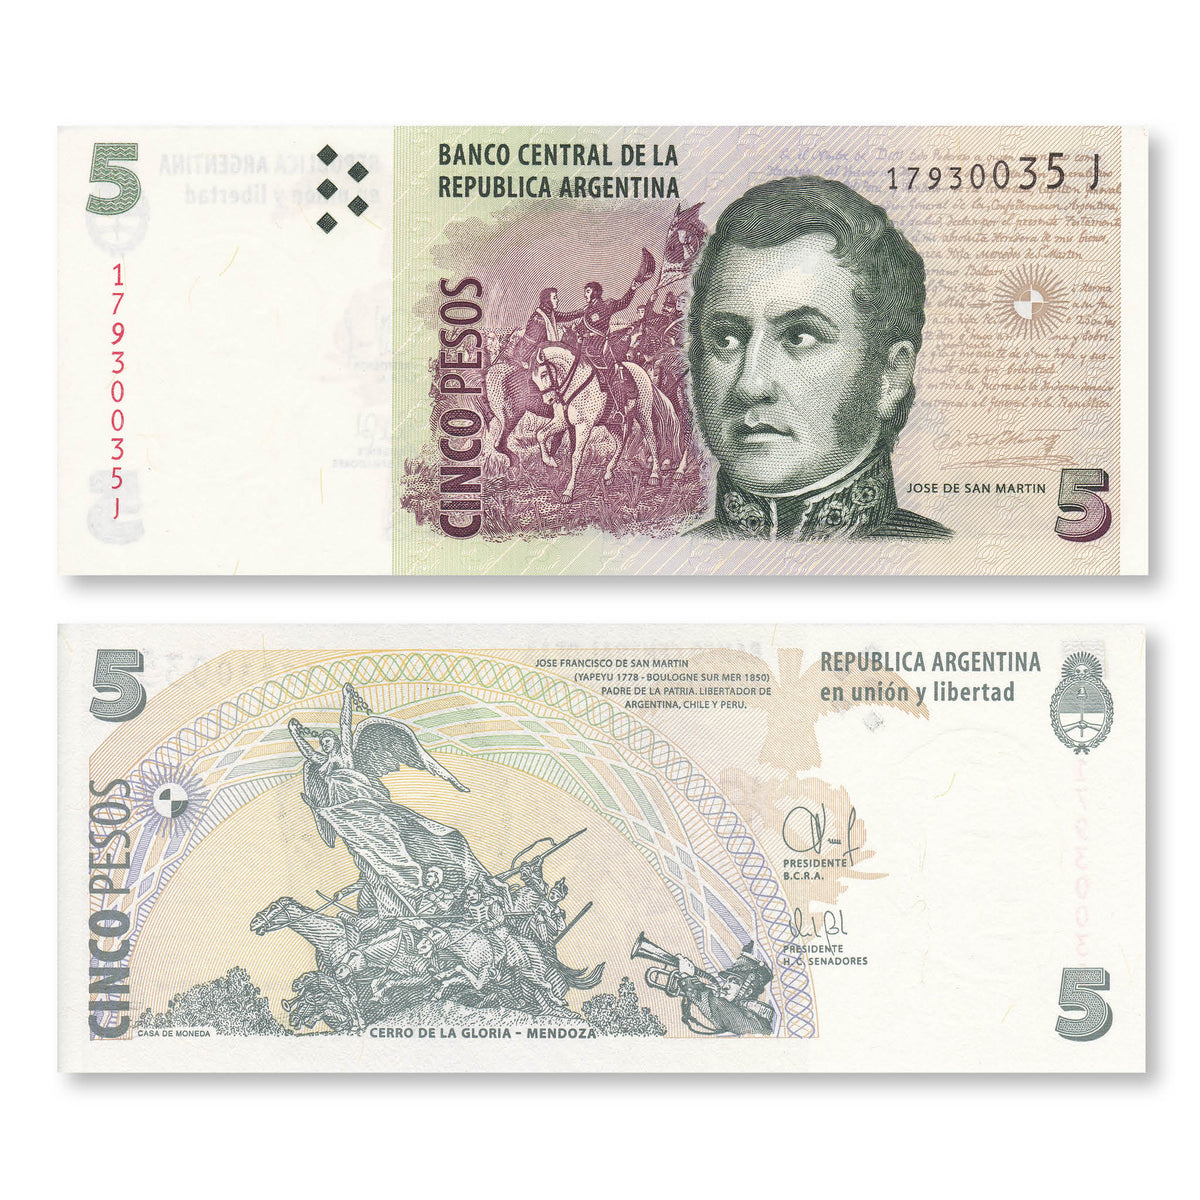 Argentina 5 Pesos, 2011, B406d, P353a, UNC - Robert's World Money - World Banknotes